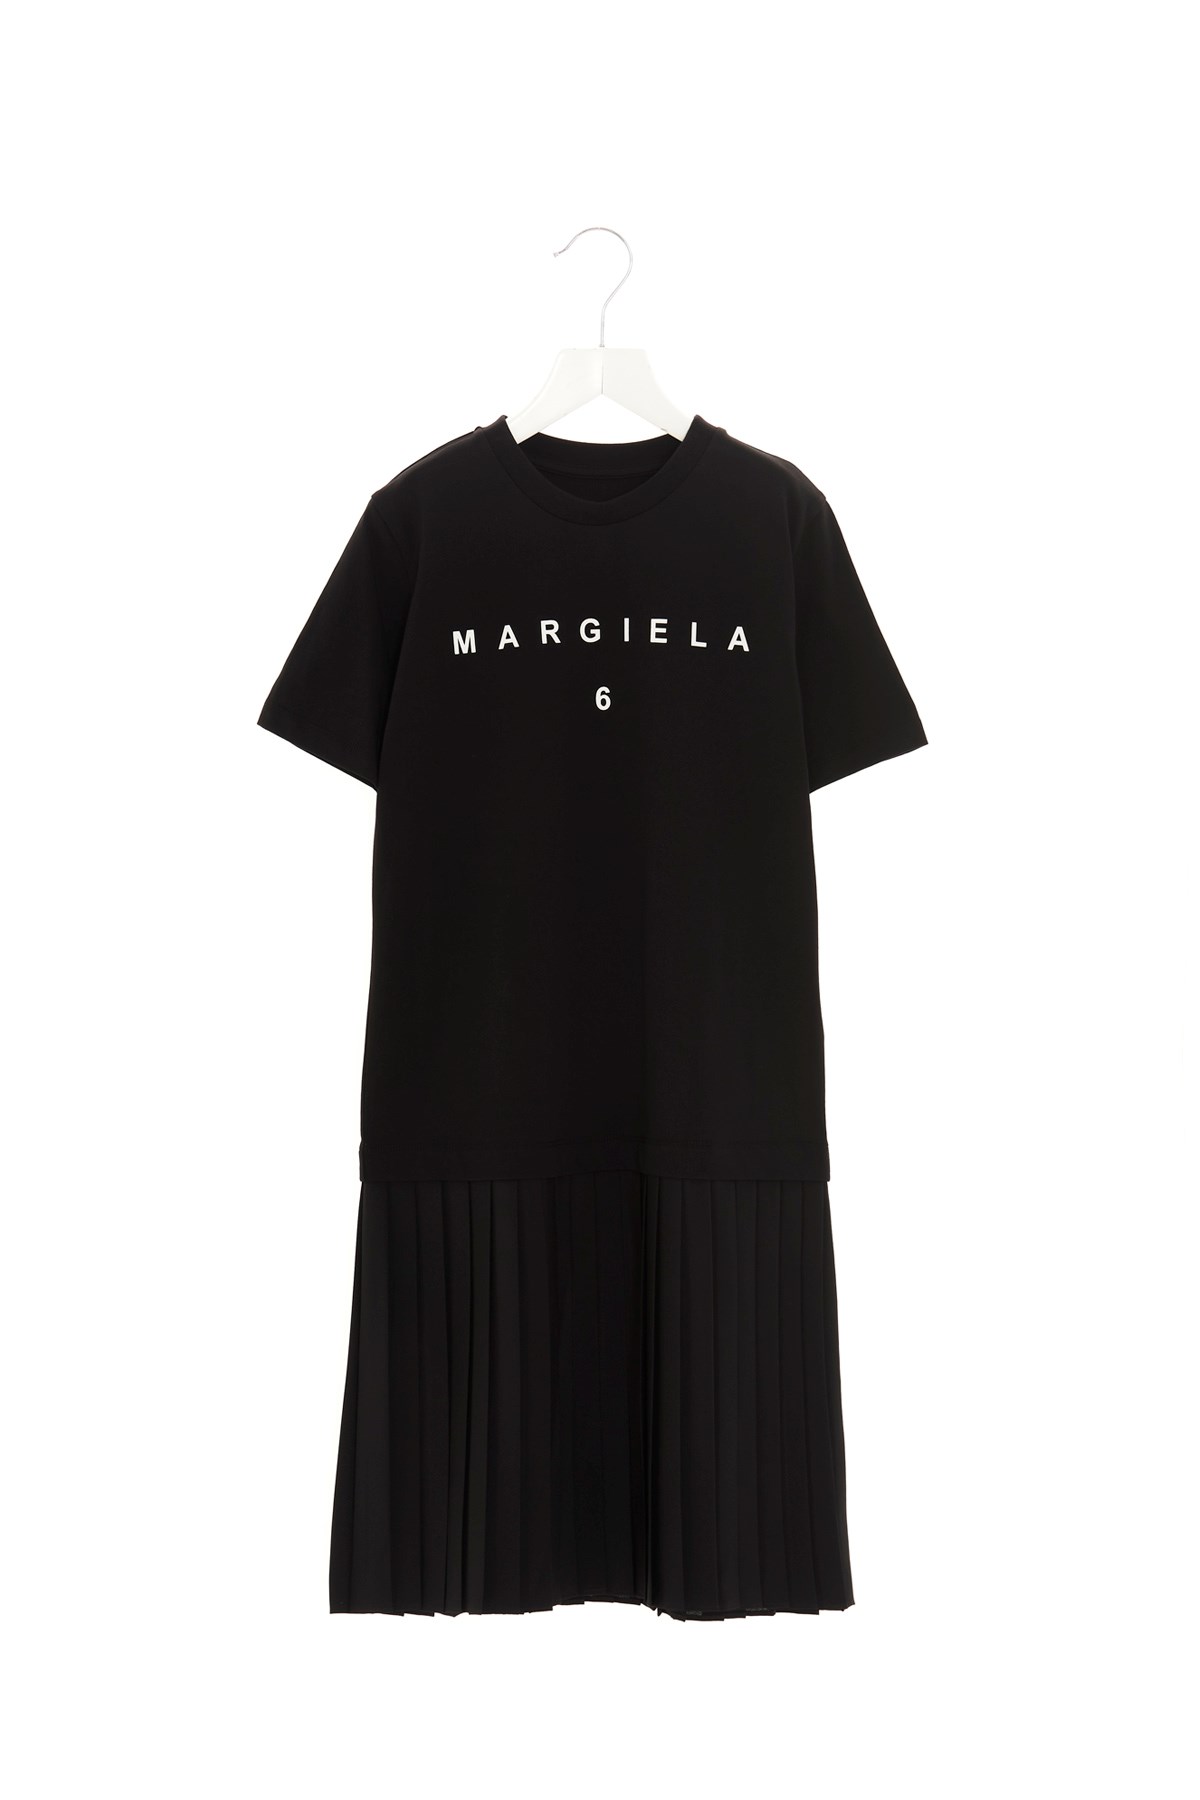 MM6 MAISON MARGIELA T-Shirt Style Dress